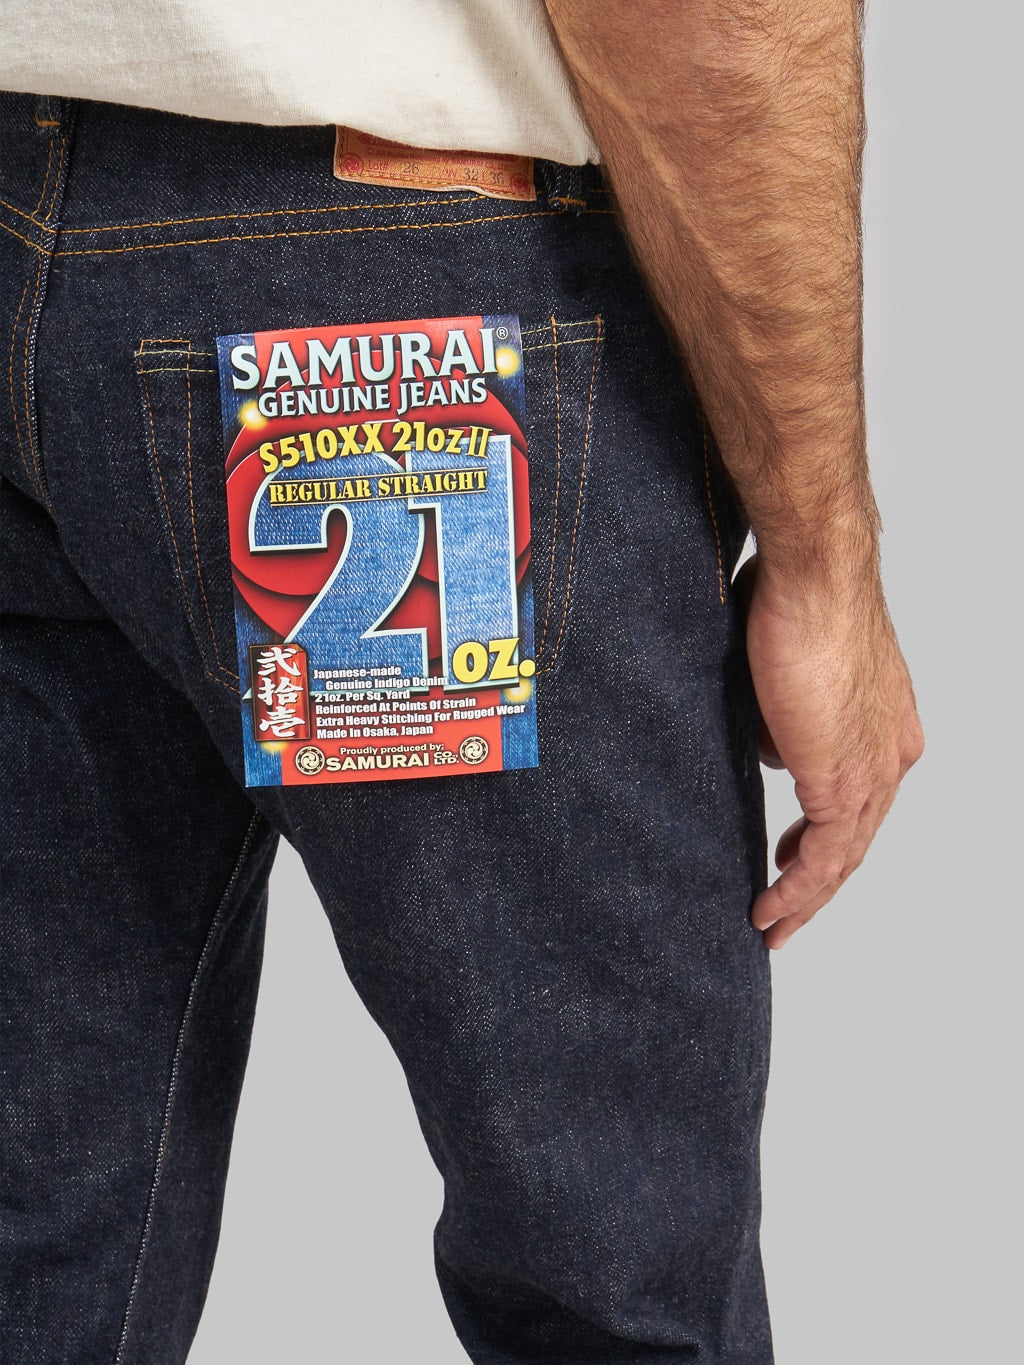 Samurai Jeans S510XX21ozII Cho Kiwami 21oz Regular Straight Jeans back pocket